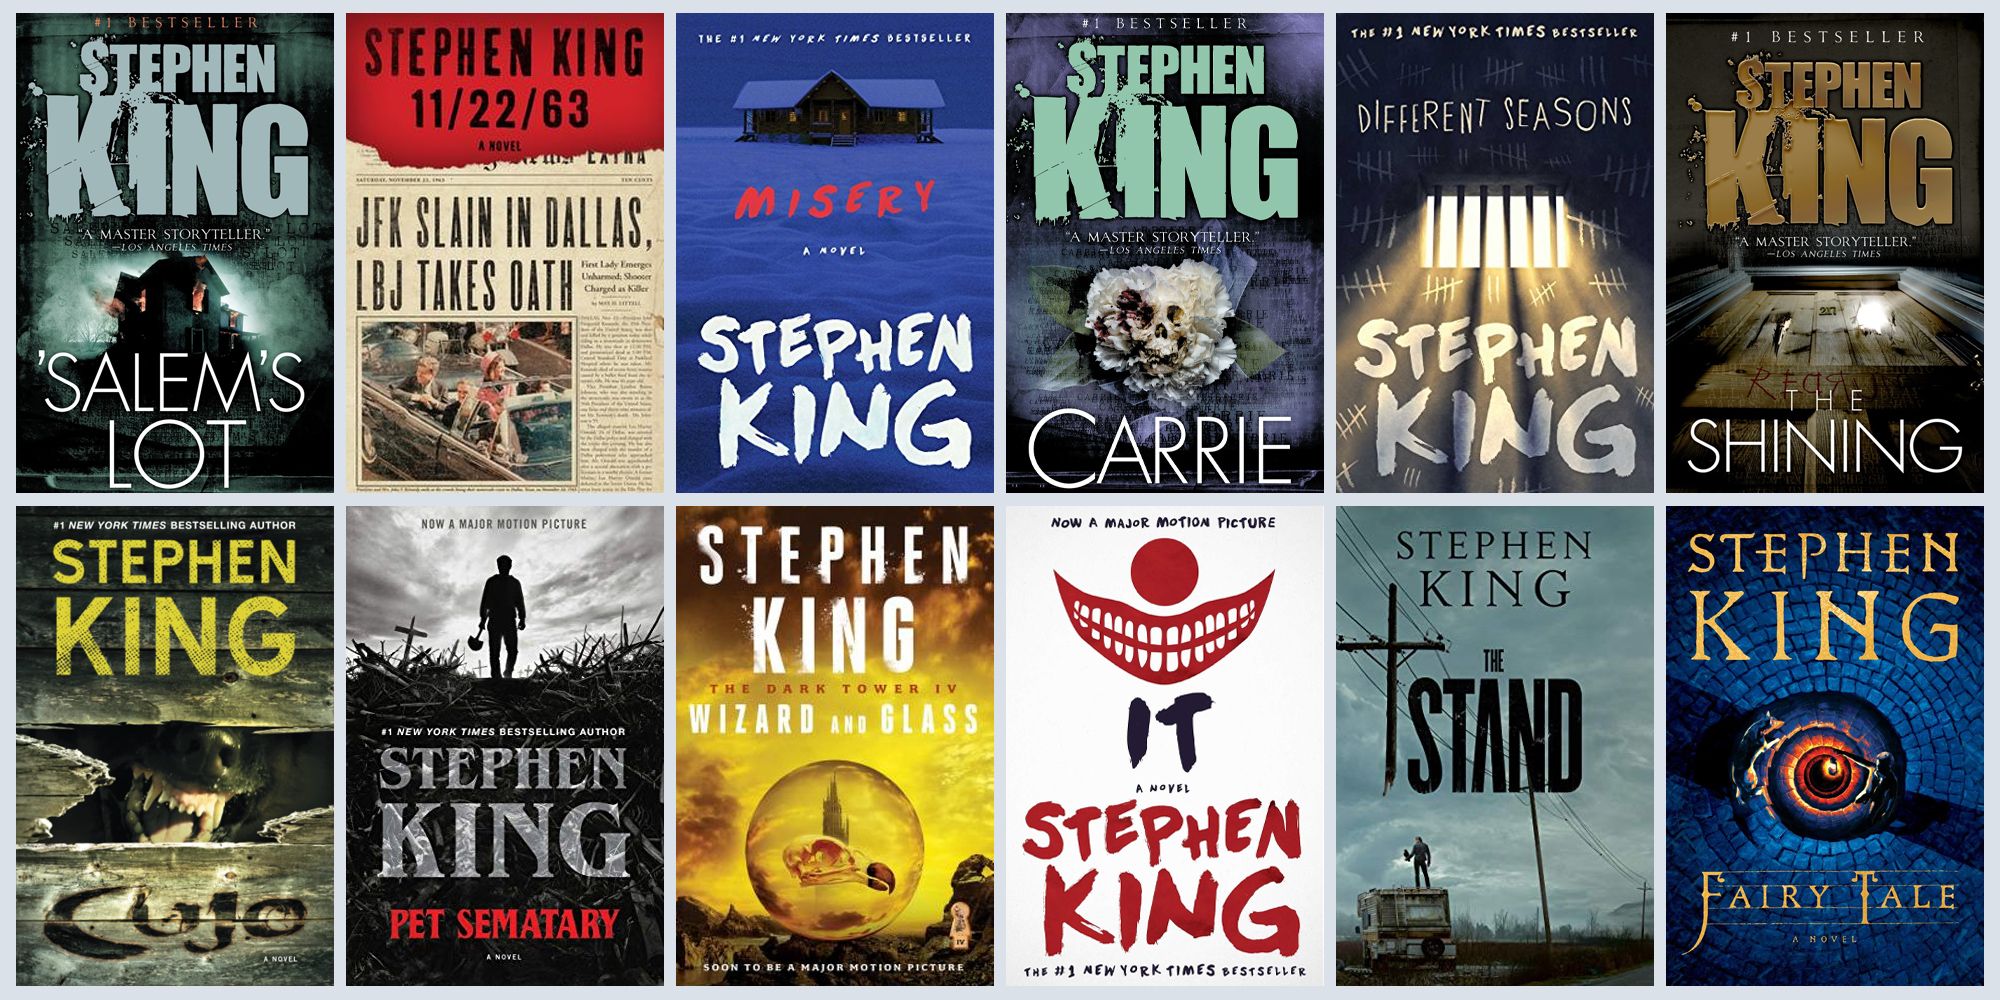 Are all Stephen King books horror stories?